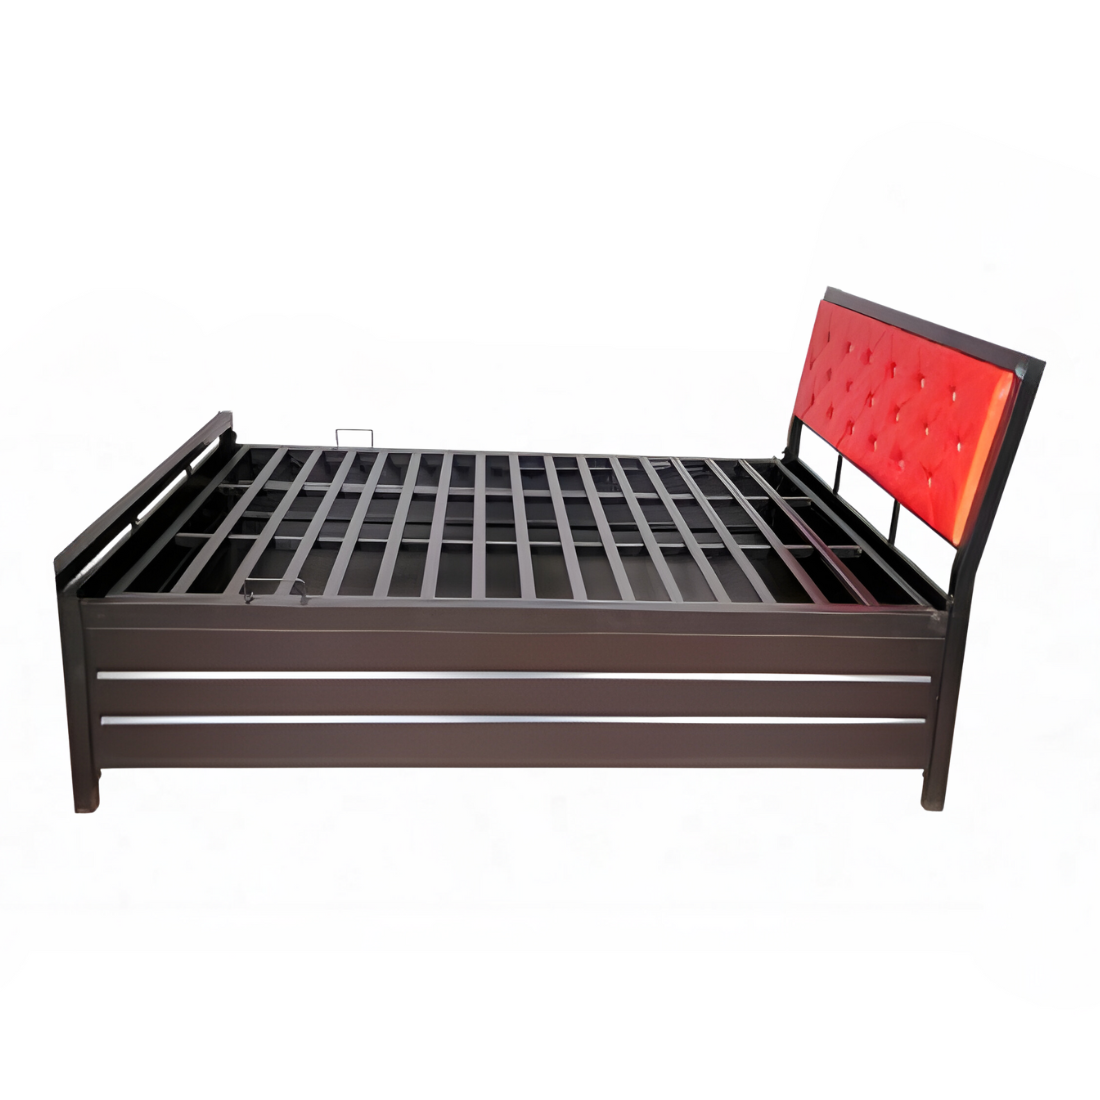 Heath Hydraulic Storage Single Metal Bed with Red Cushion Headrest (Color - Black)